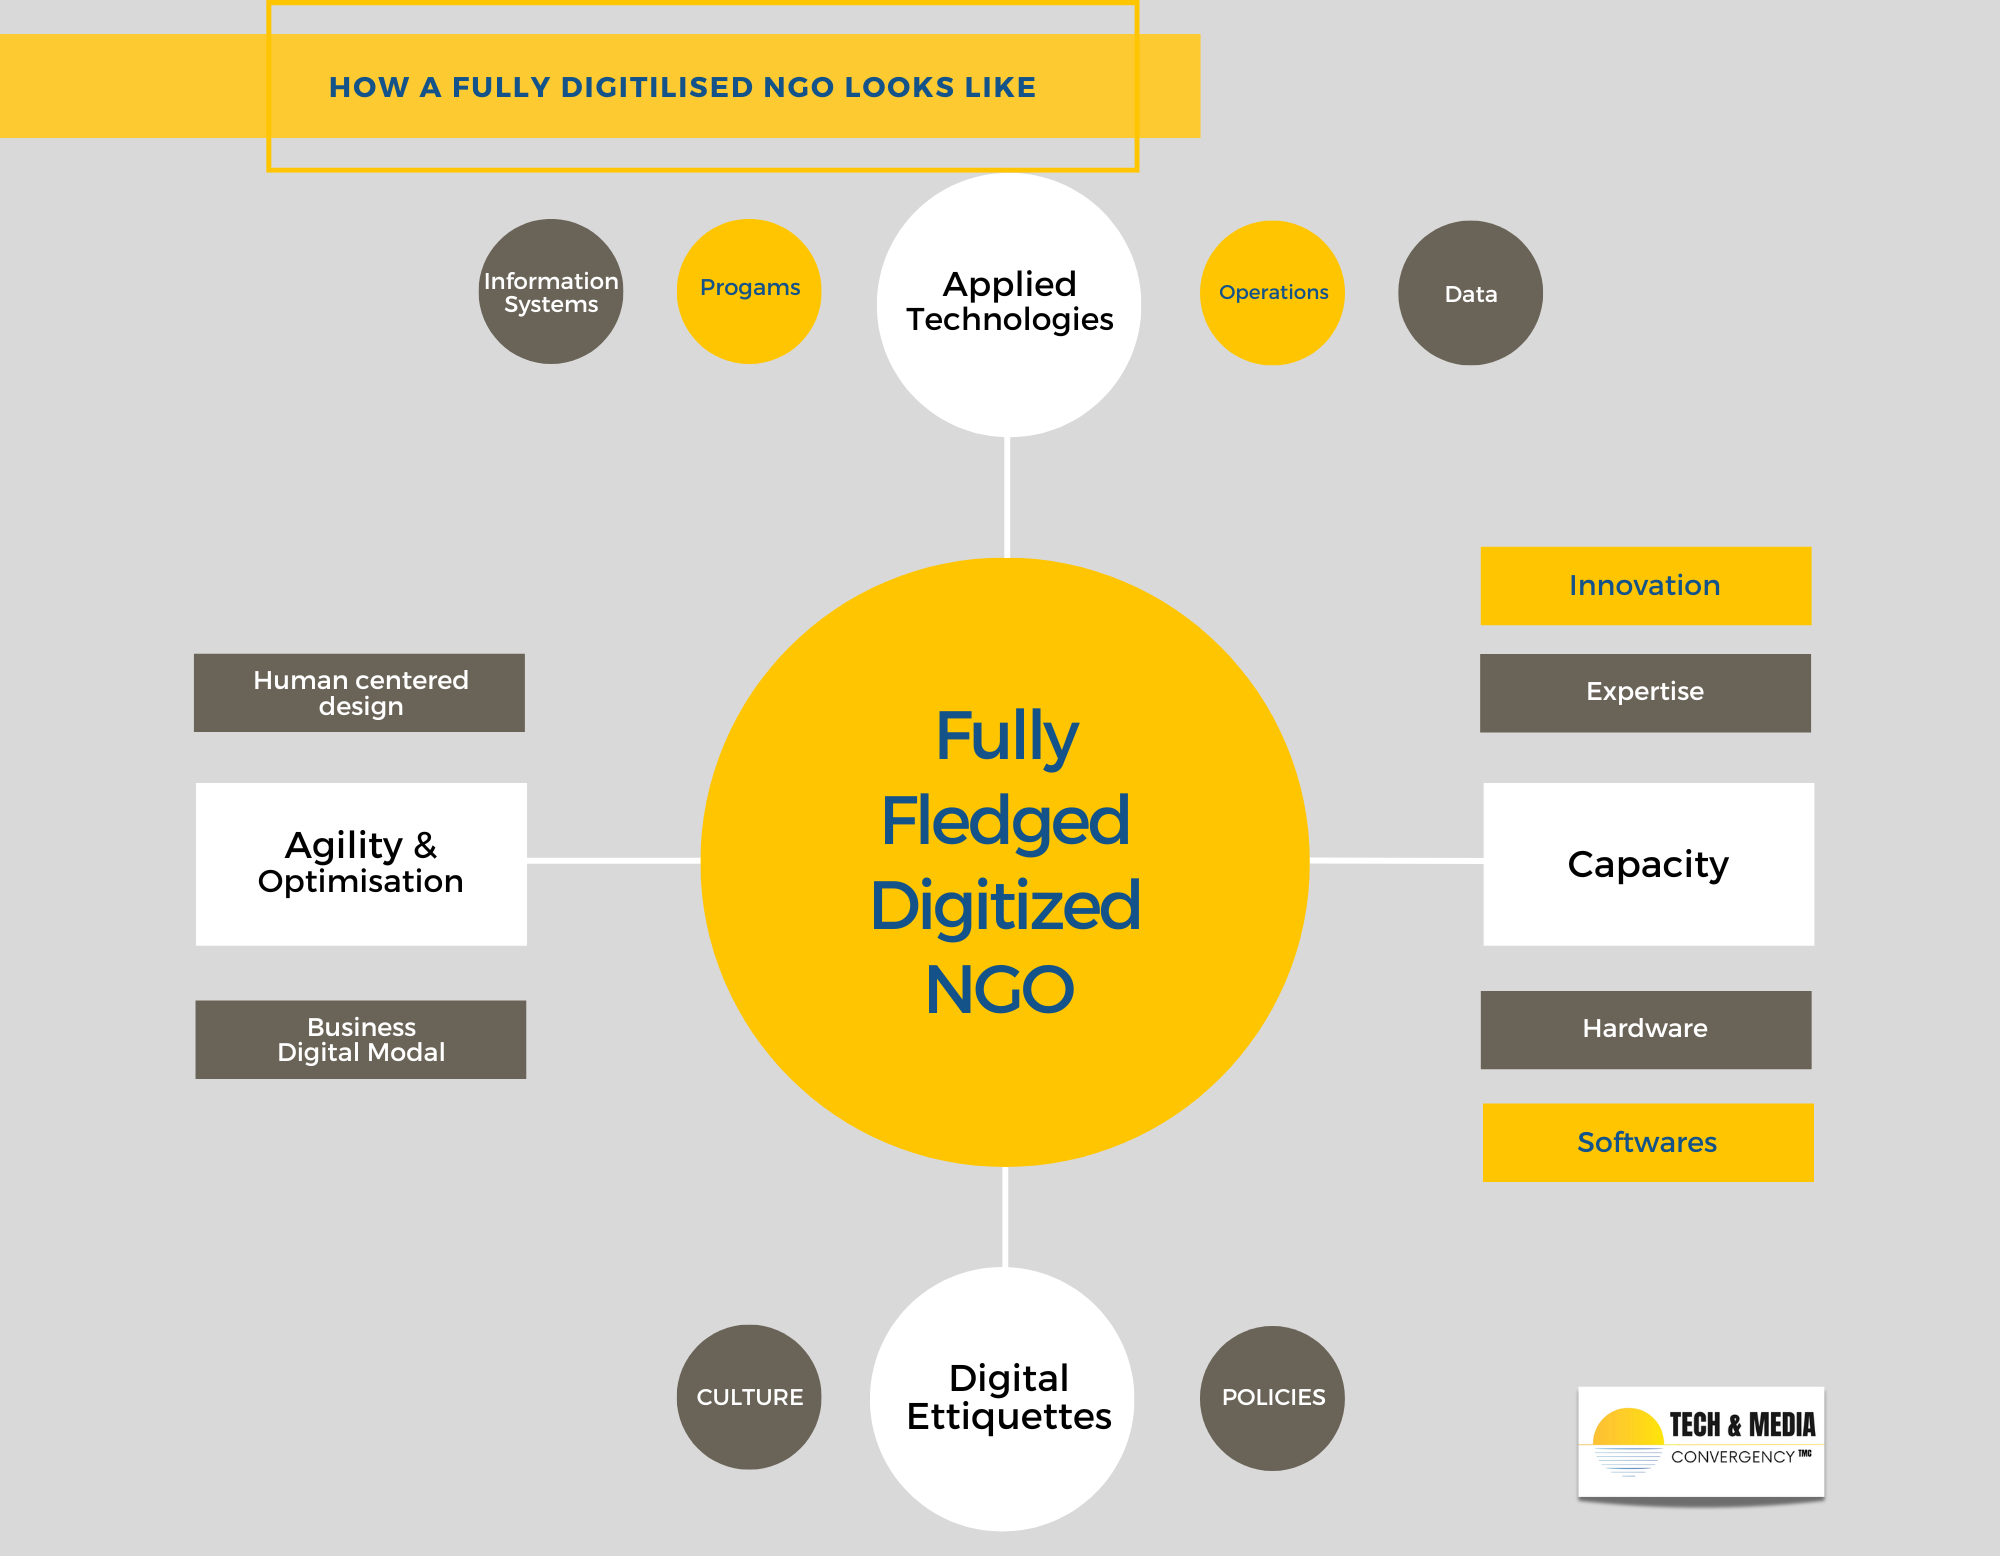 The ten (10) factors impeding Technology Integration for NGOs